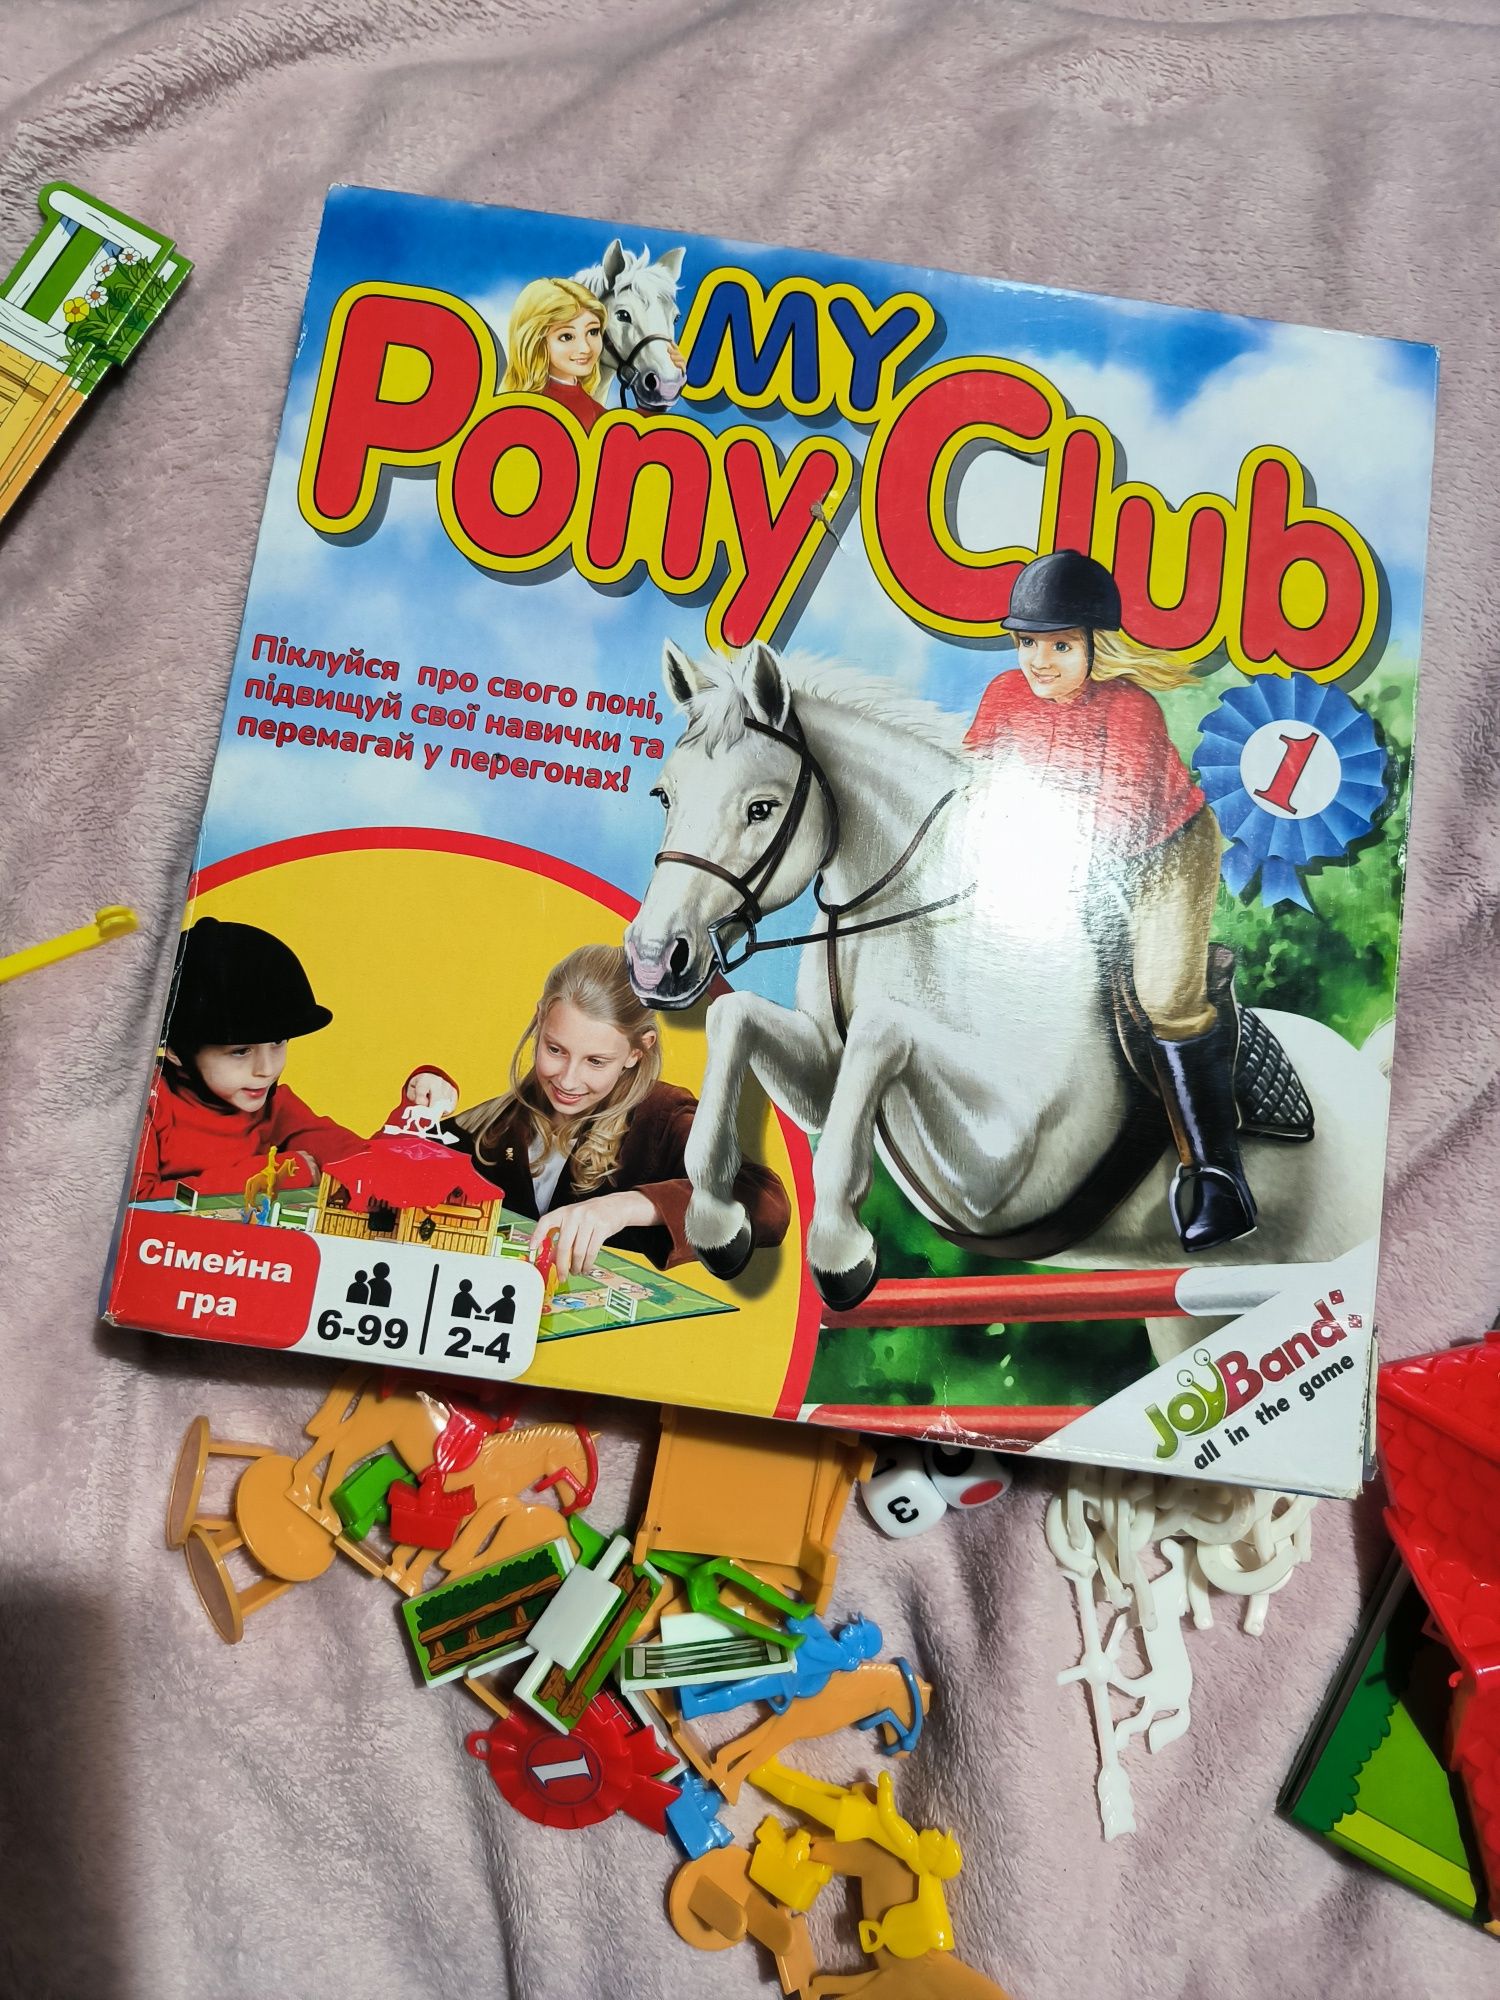 Гра "My pony club"